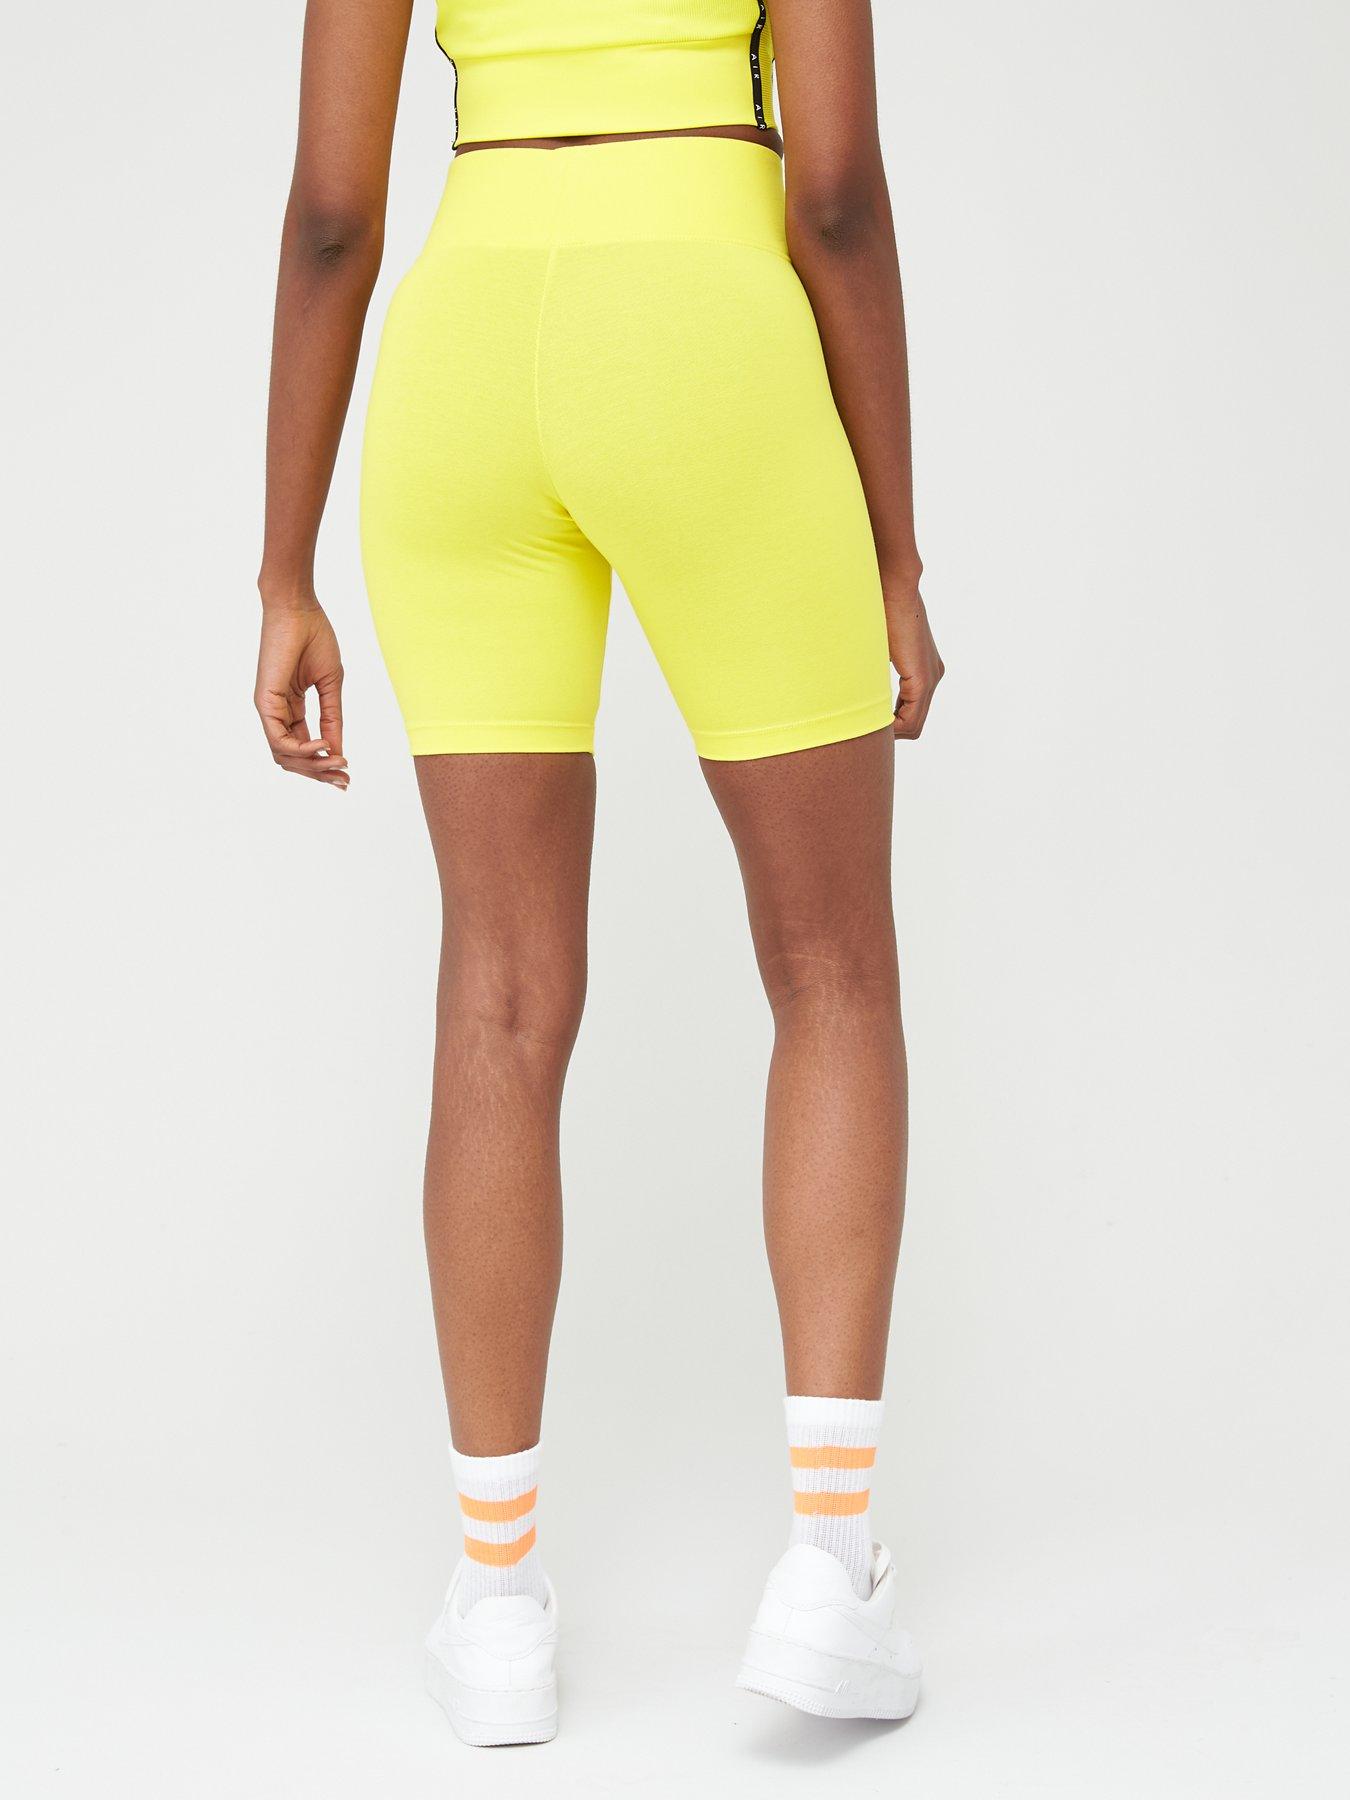 yellow nike bike shorts